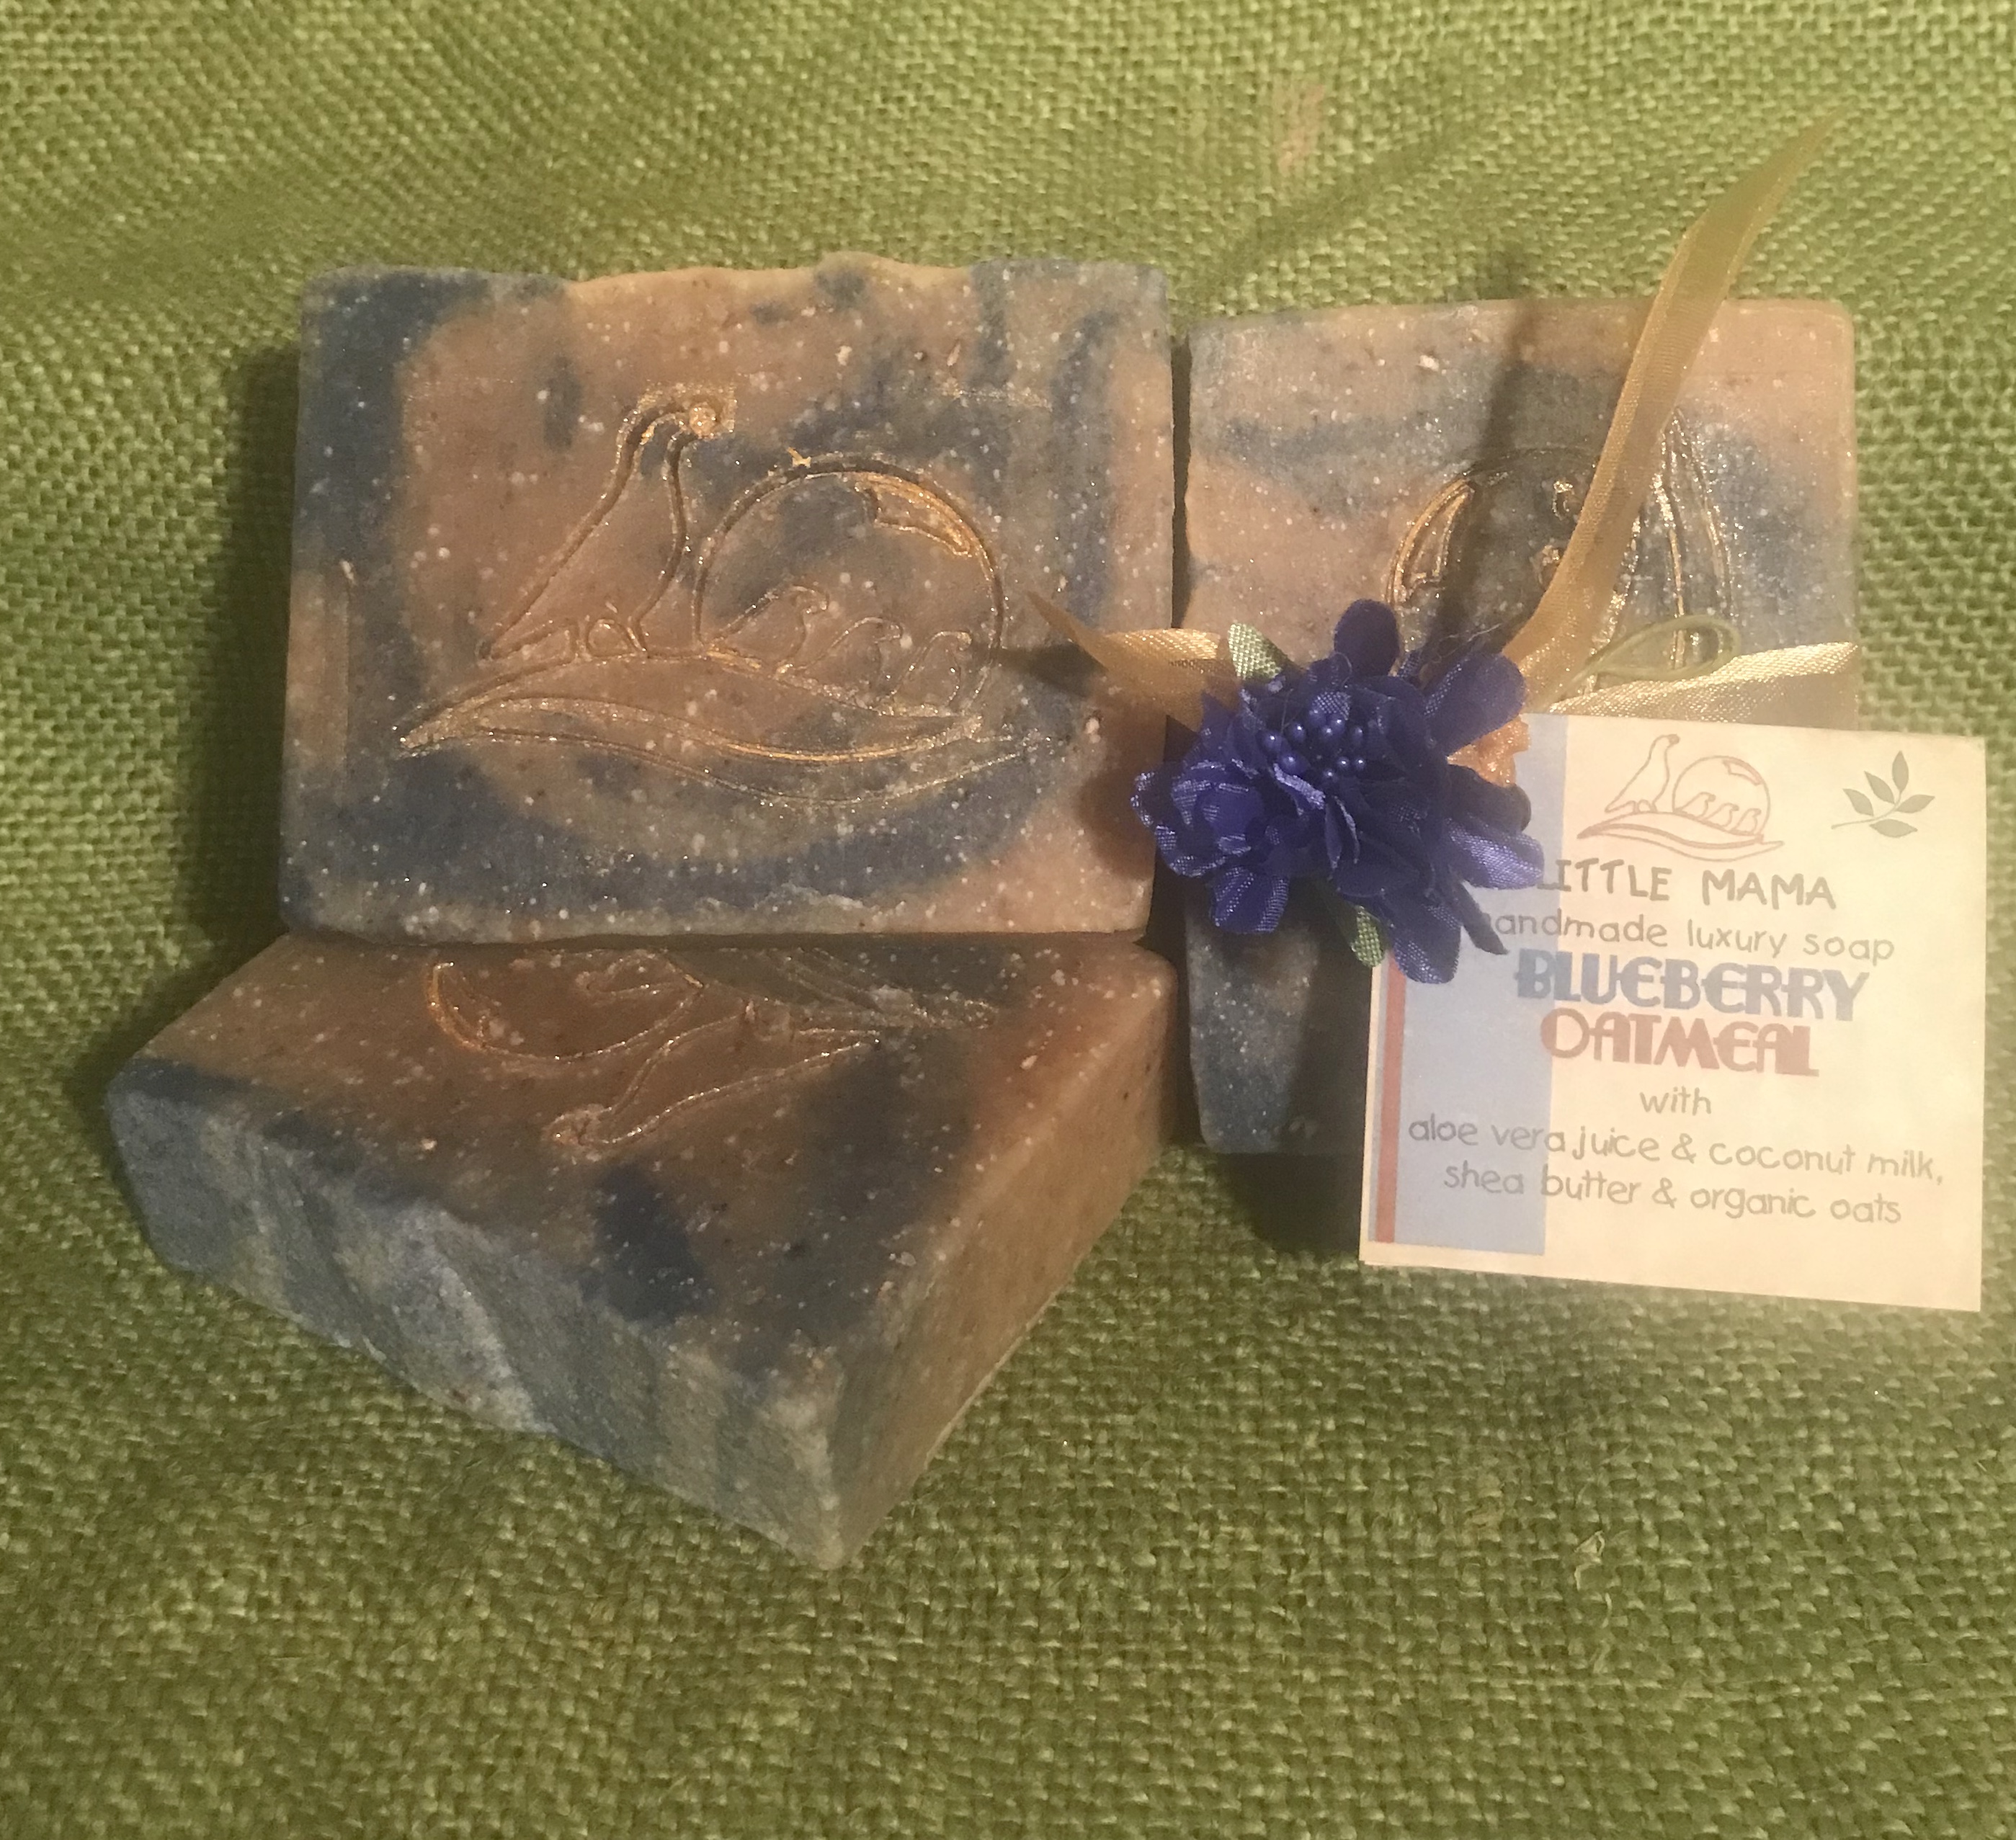 Blueberry Oatmeal Soap